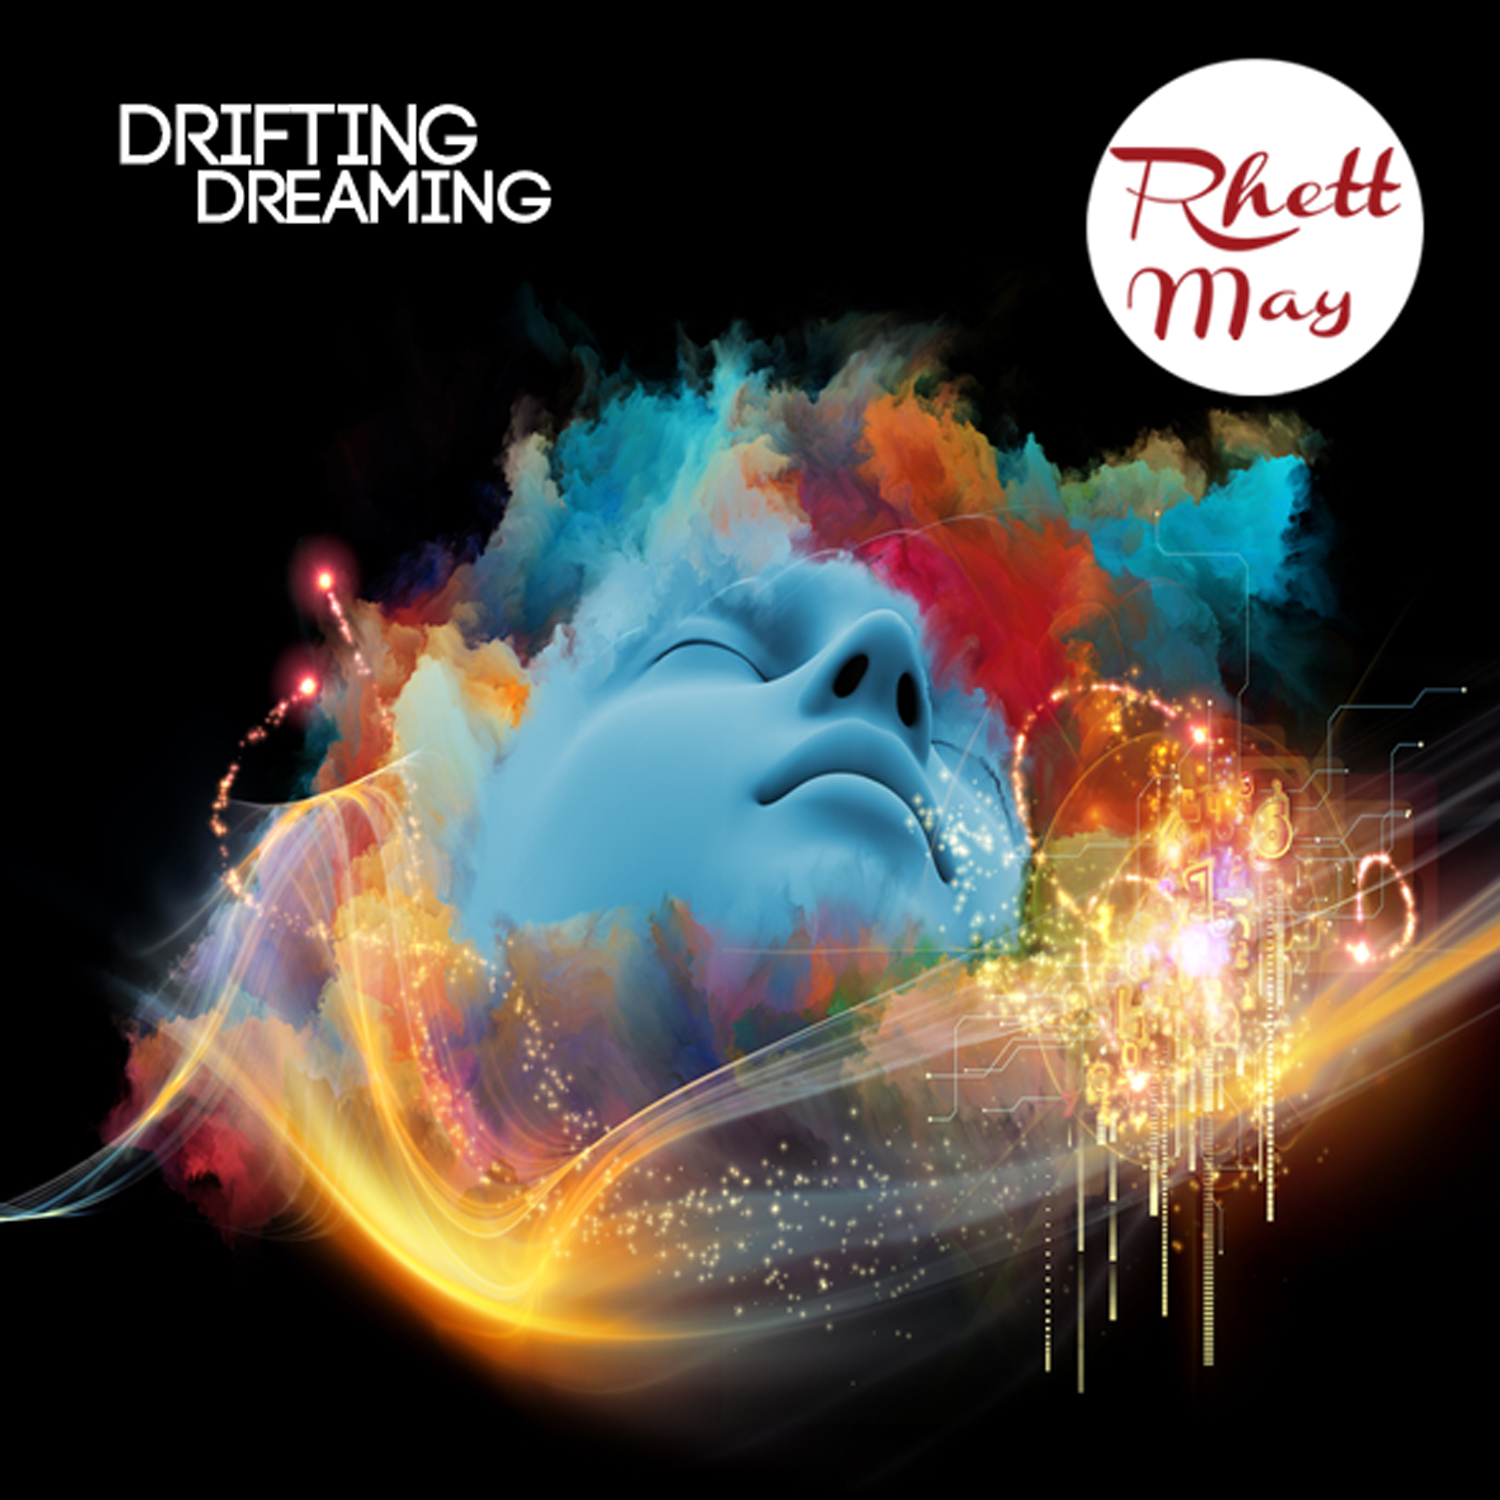 Drifting Dreaming